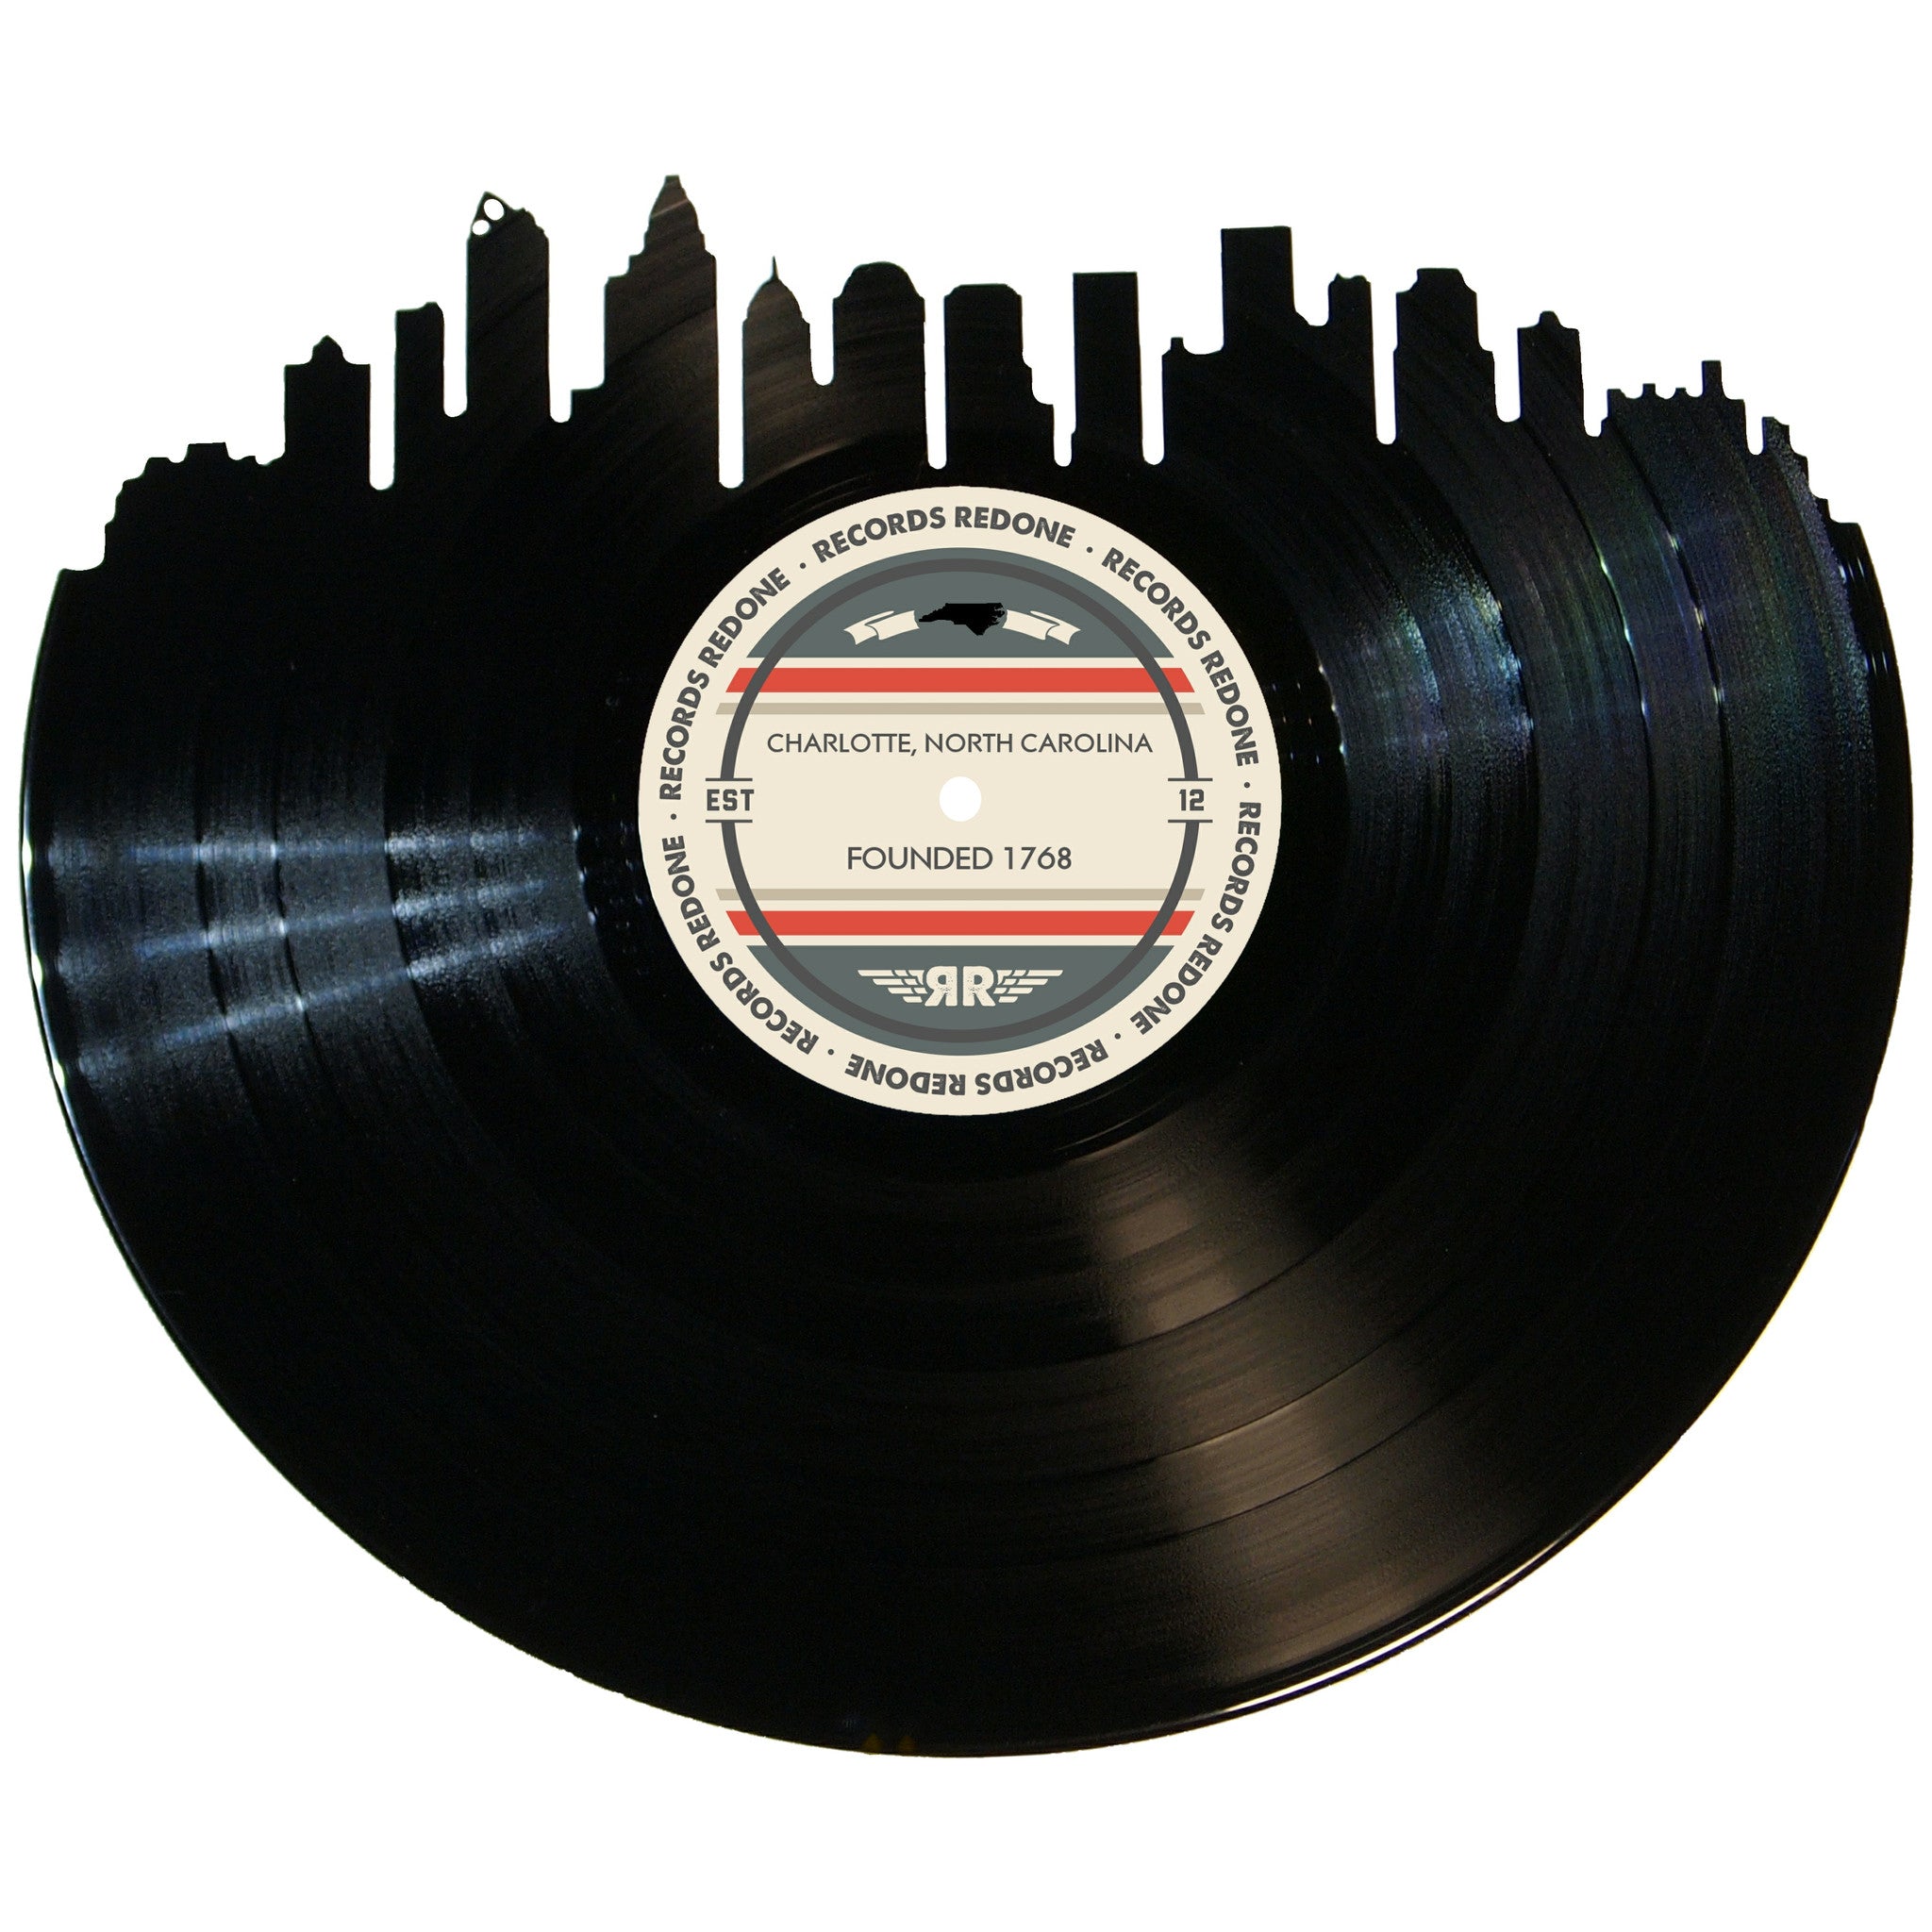 Poster Vinyl records, Presentes & Merchandising